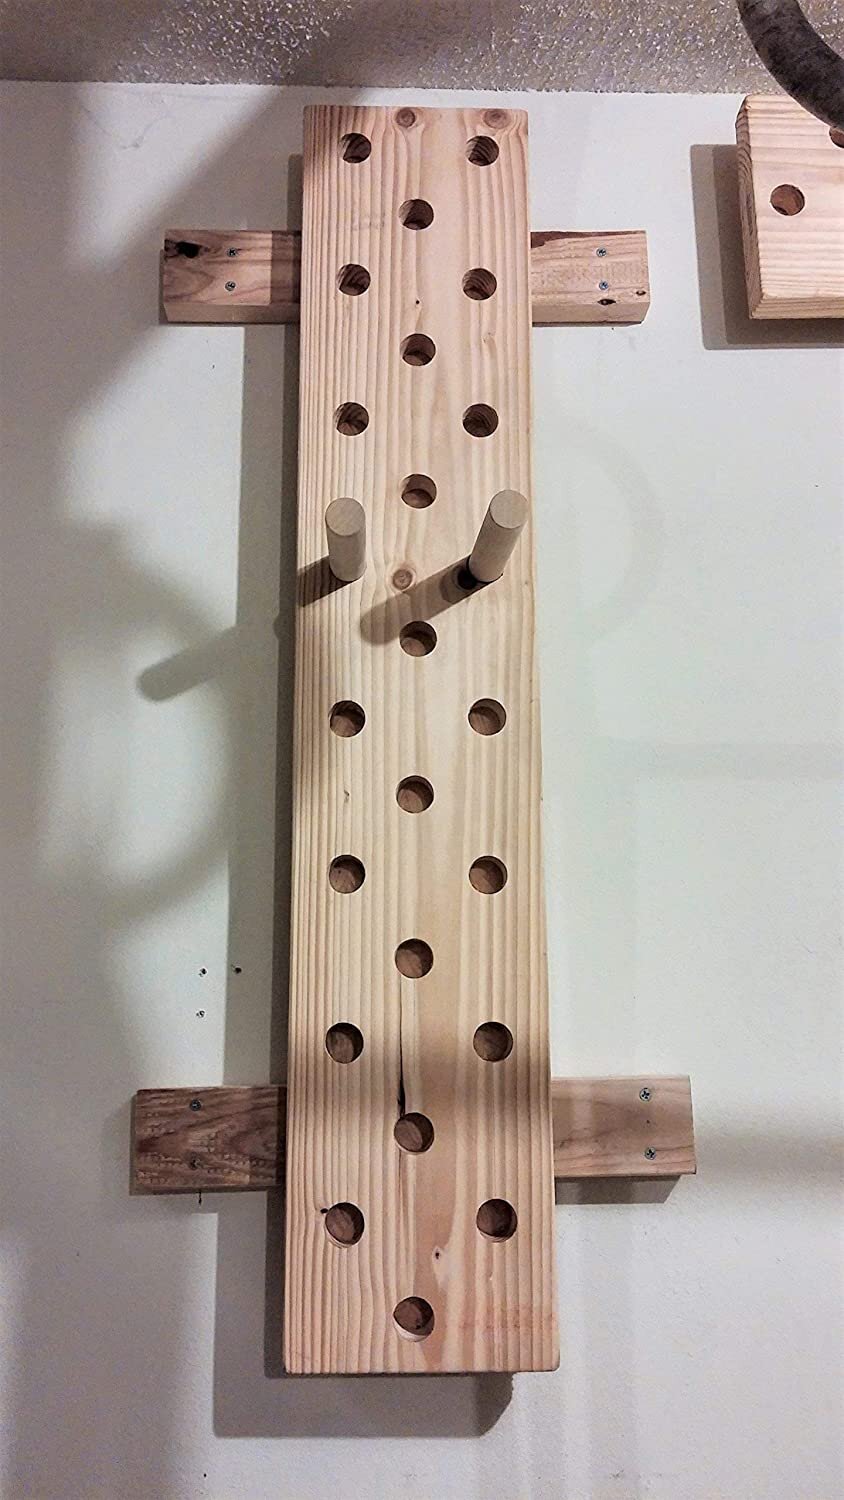 Wooden Peg Board - A Ninja Warrior Climbing Obstacle